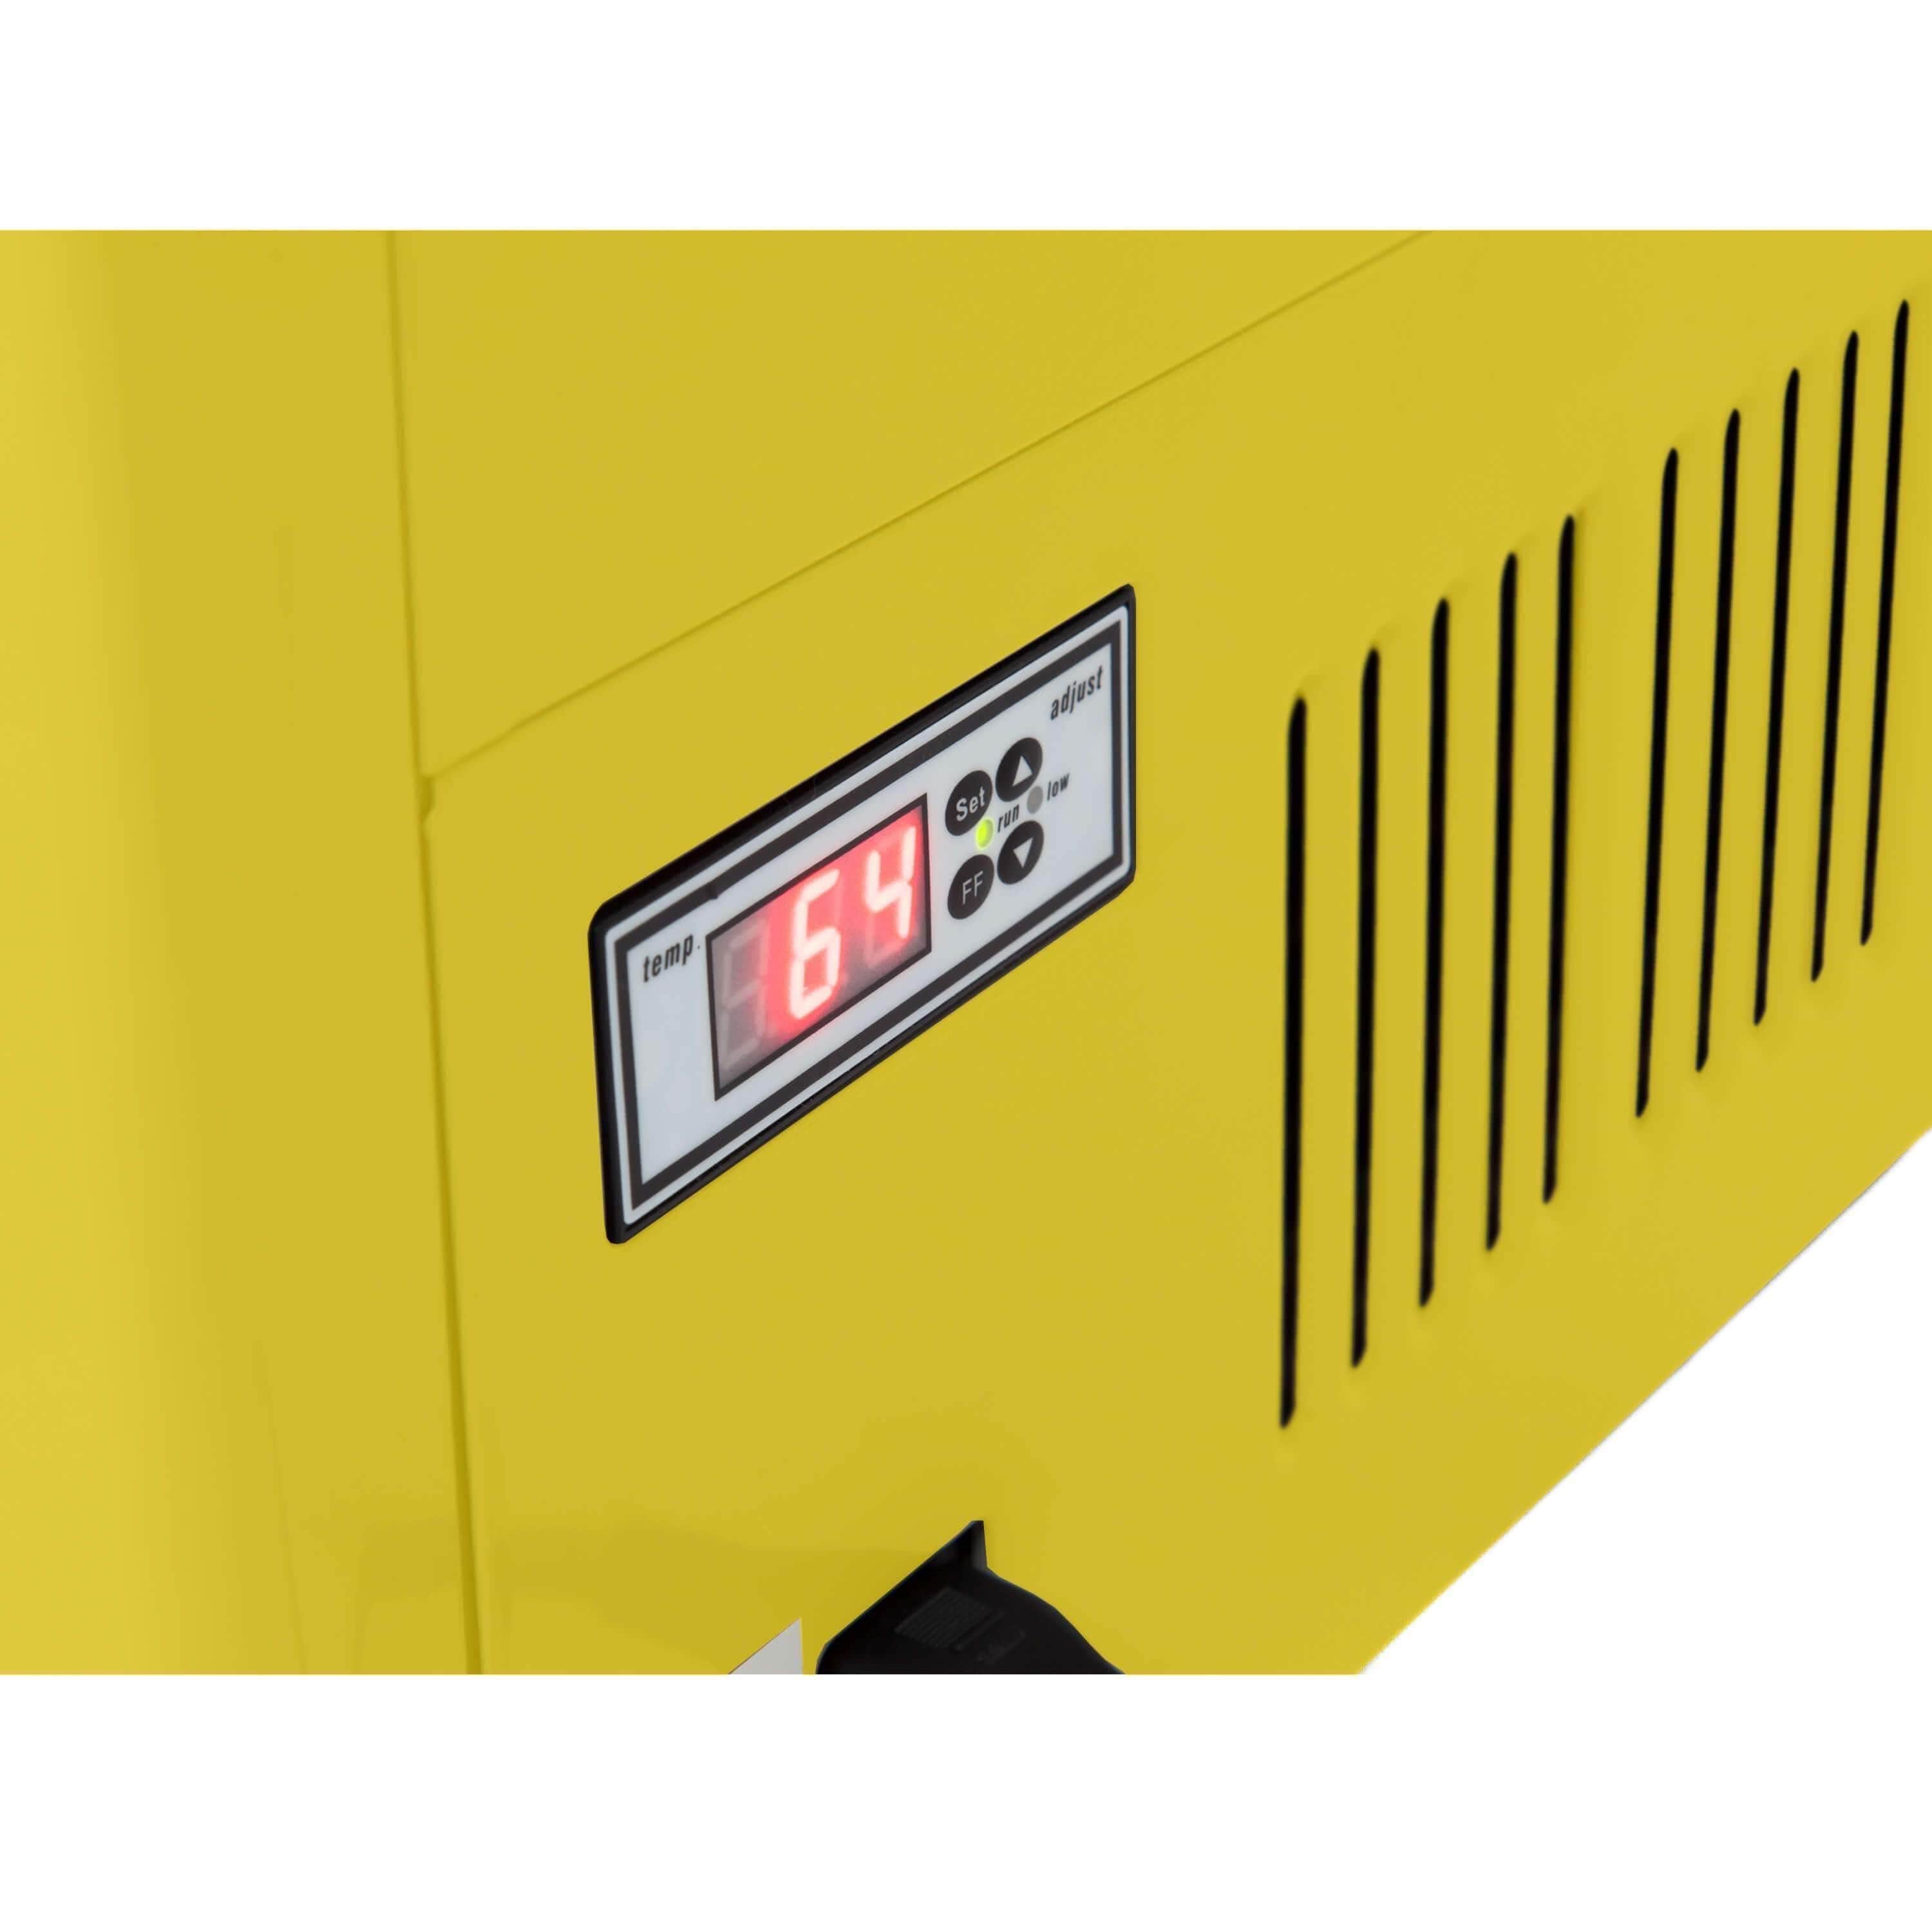 Whynter 95 Quart Portable Fridge / Freezer - Limited Edition Yellow FM-951YW Freezers FM-951YW Luxury Appliances Direct